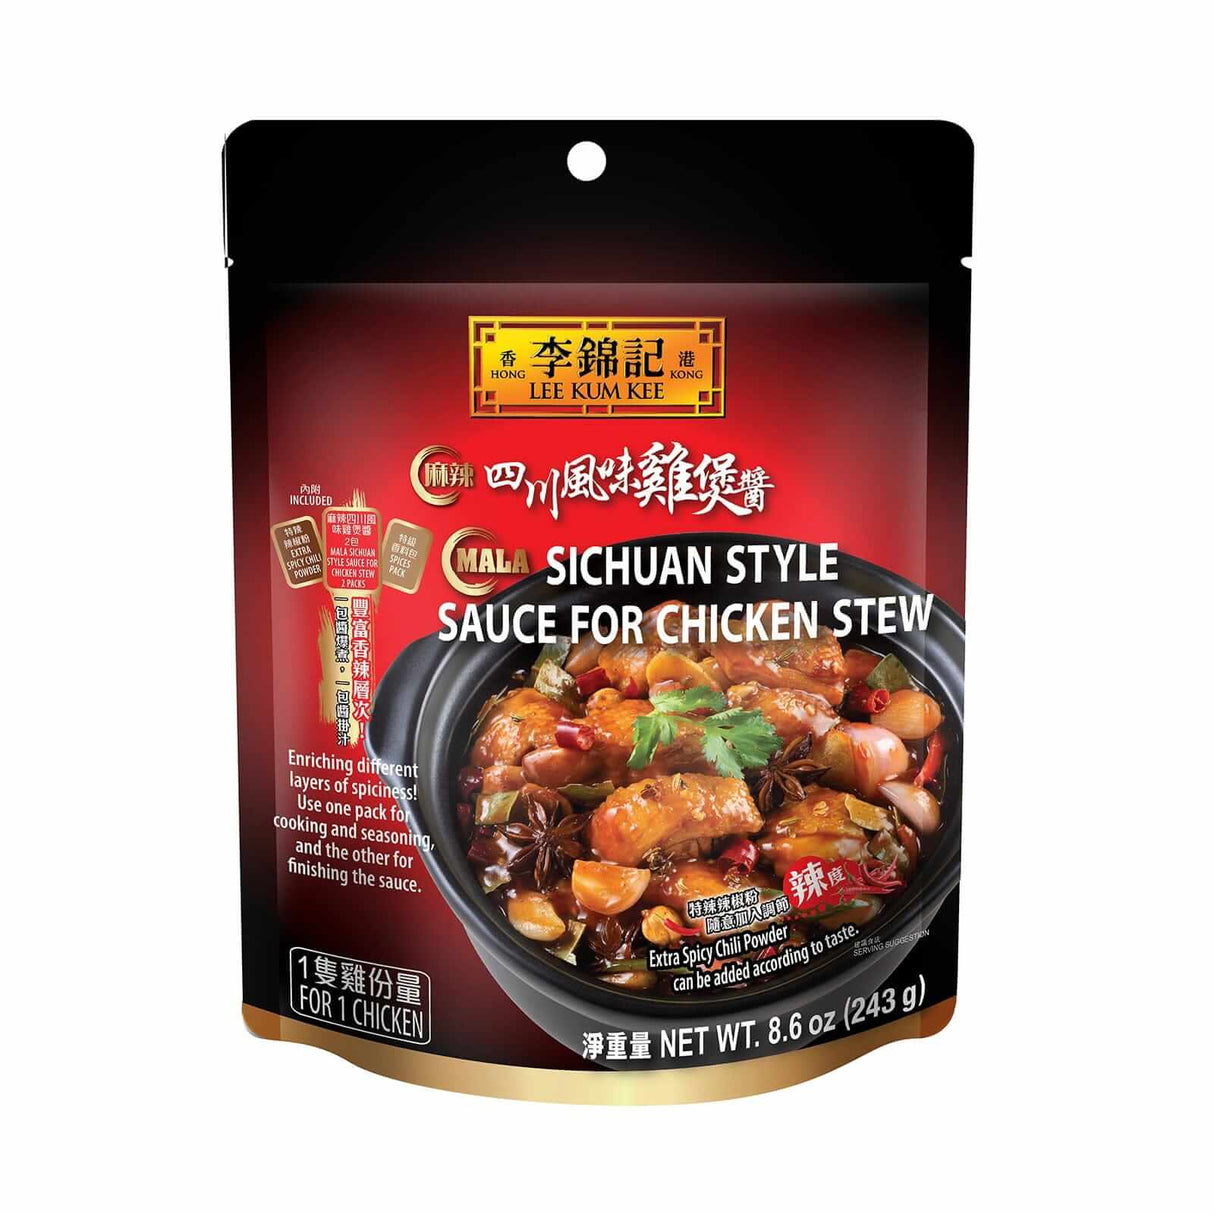 Lee Kum Kee Sichuan Style Sauce For Chicken Stew